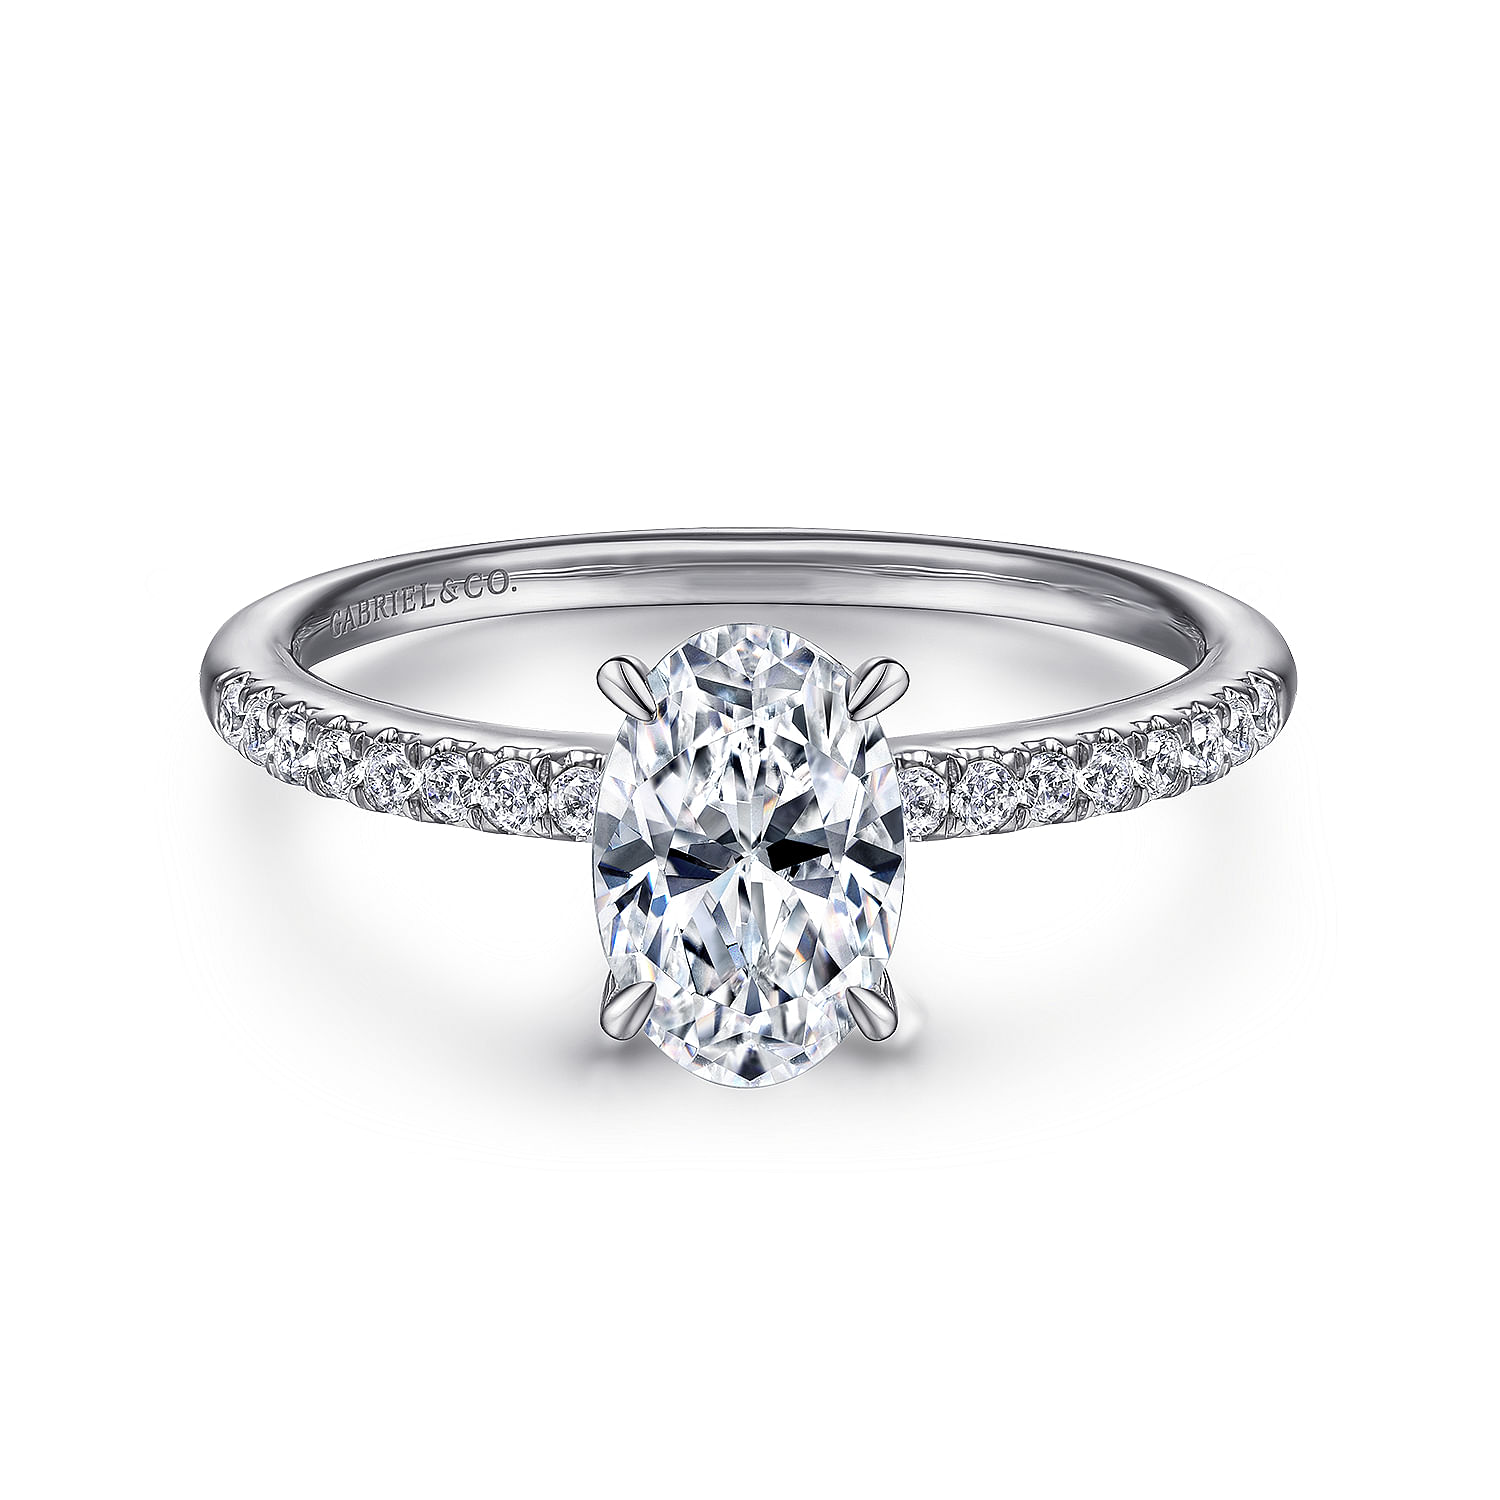 Kelly - 14K White Gold Oval Diamond Engagement Ring